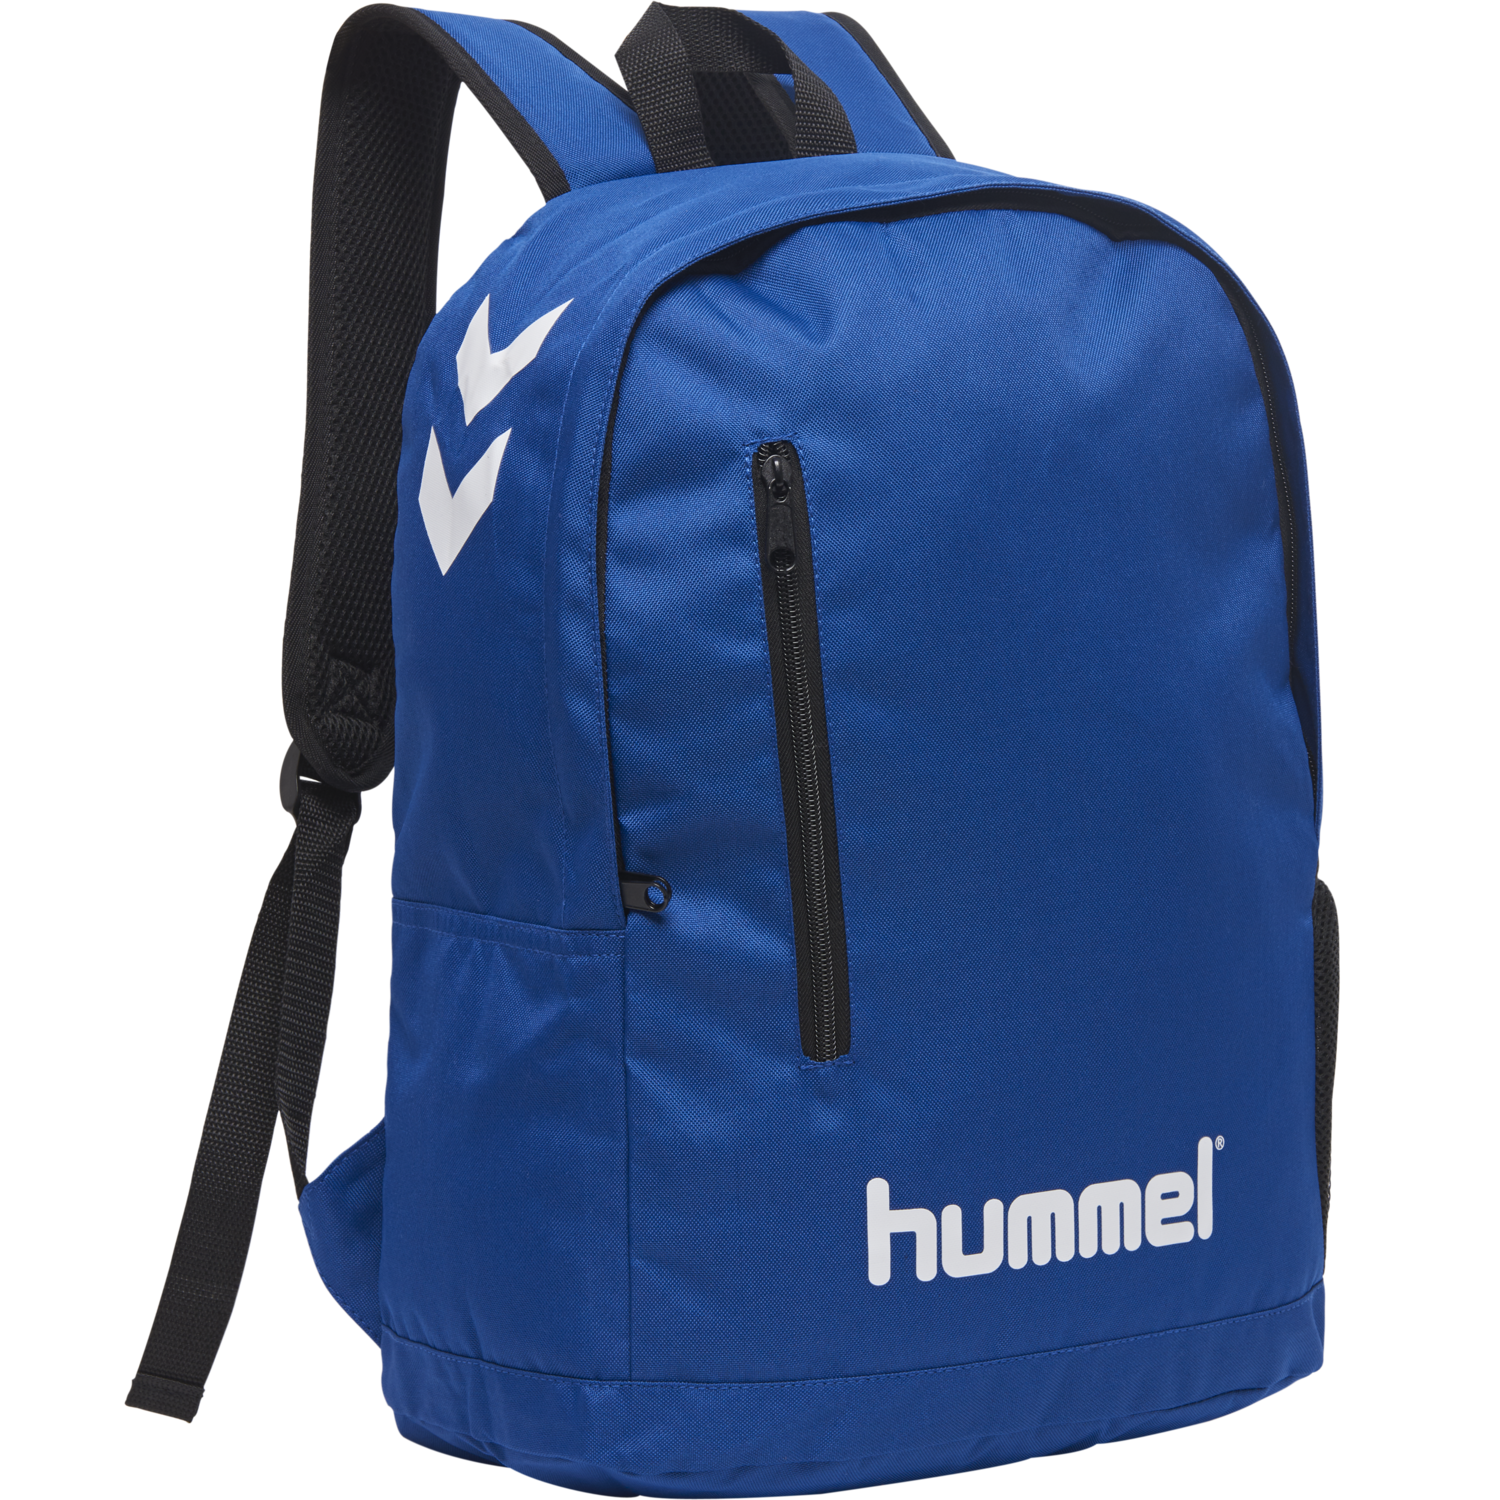 CORE BACK PACK - BLUE | hummel.net